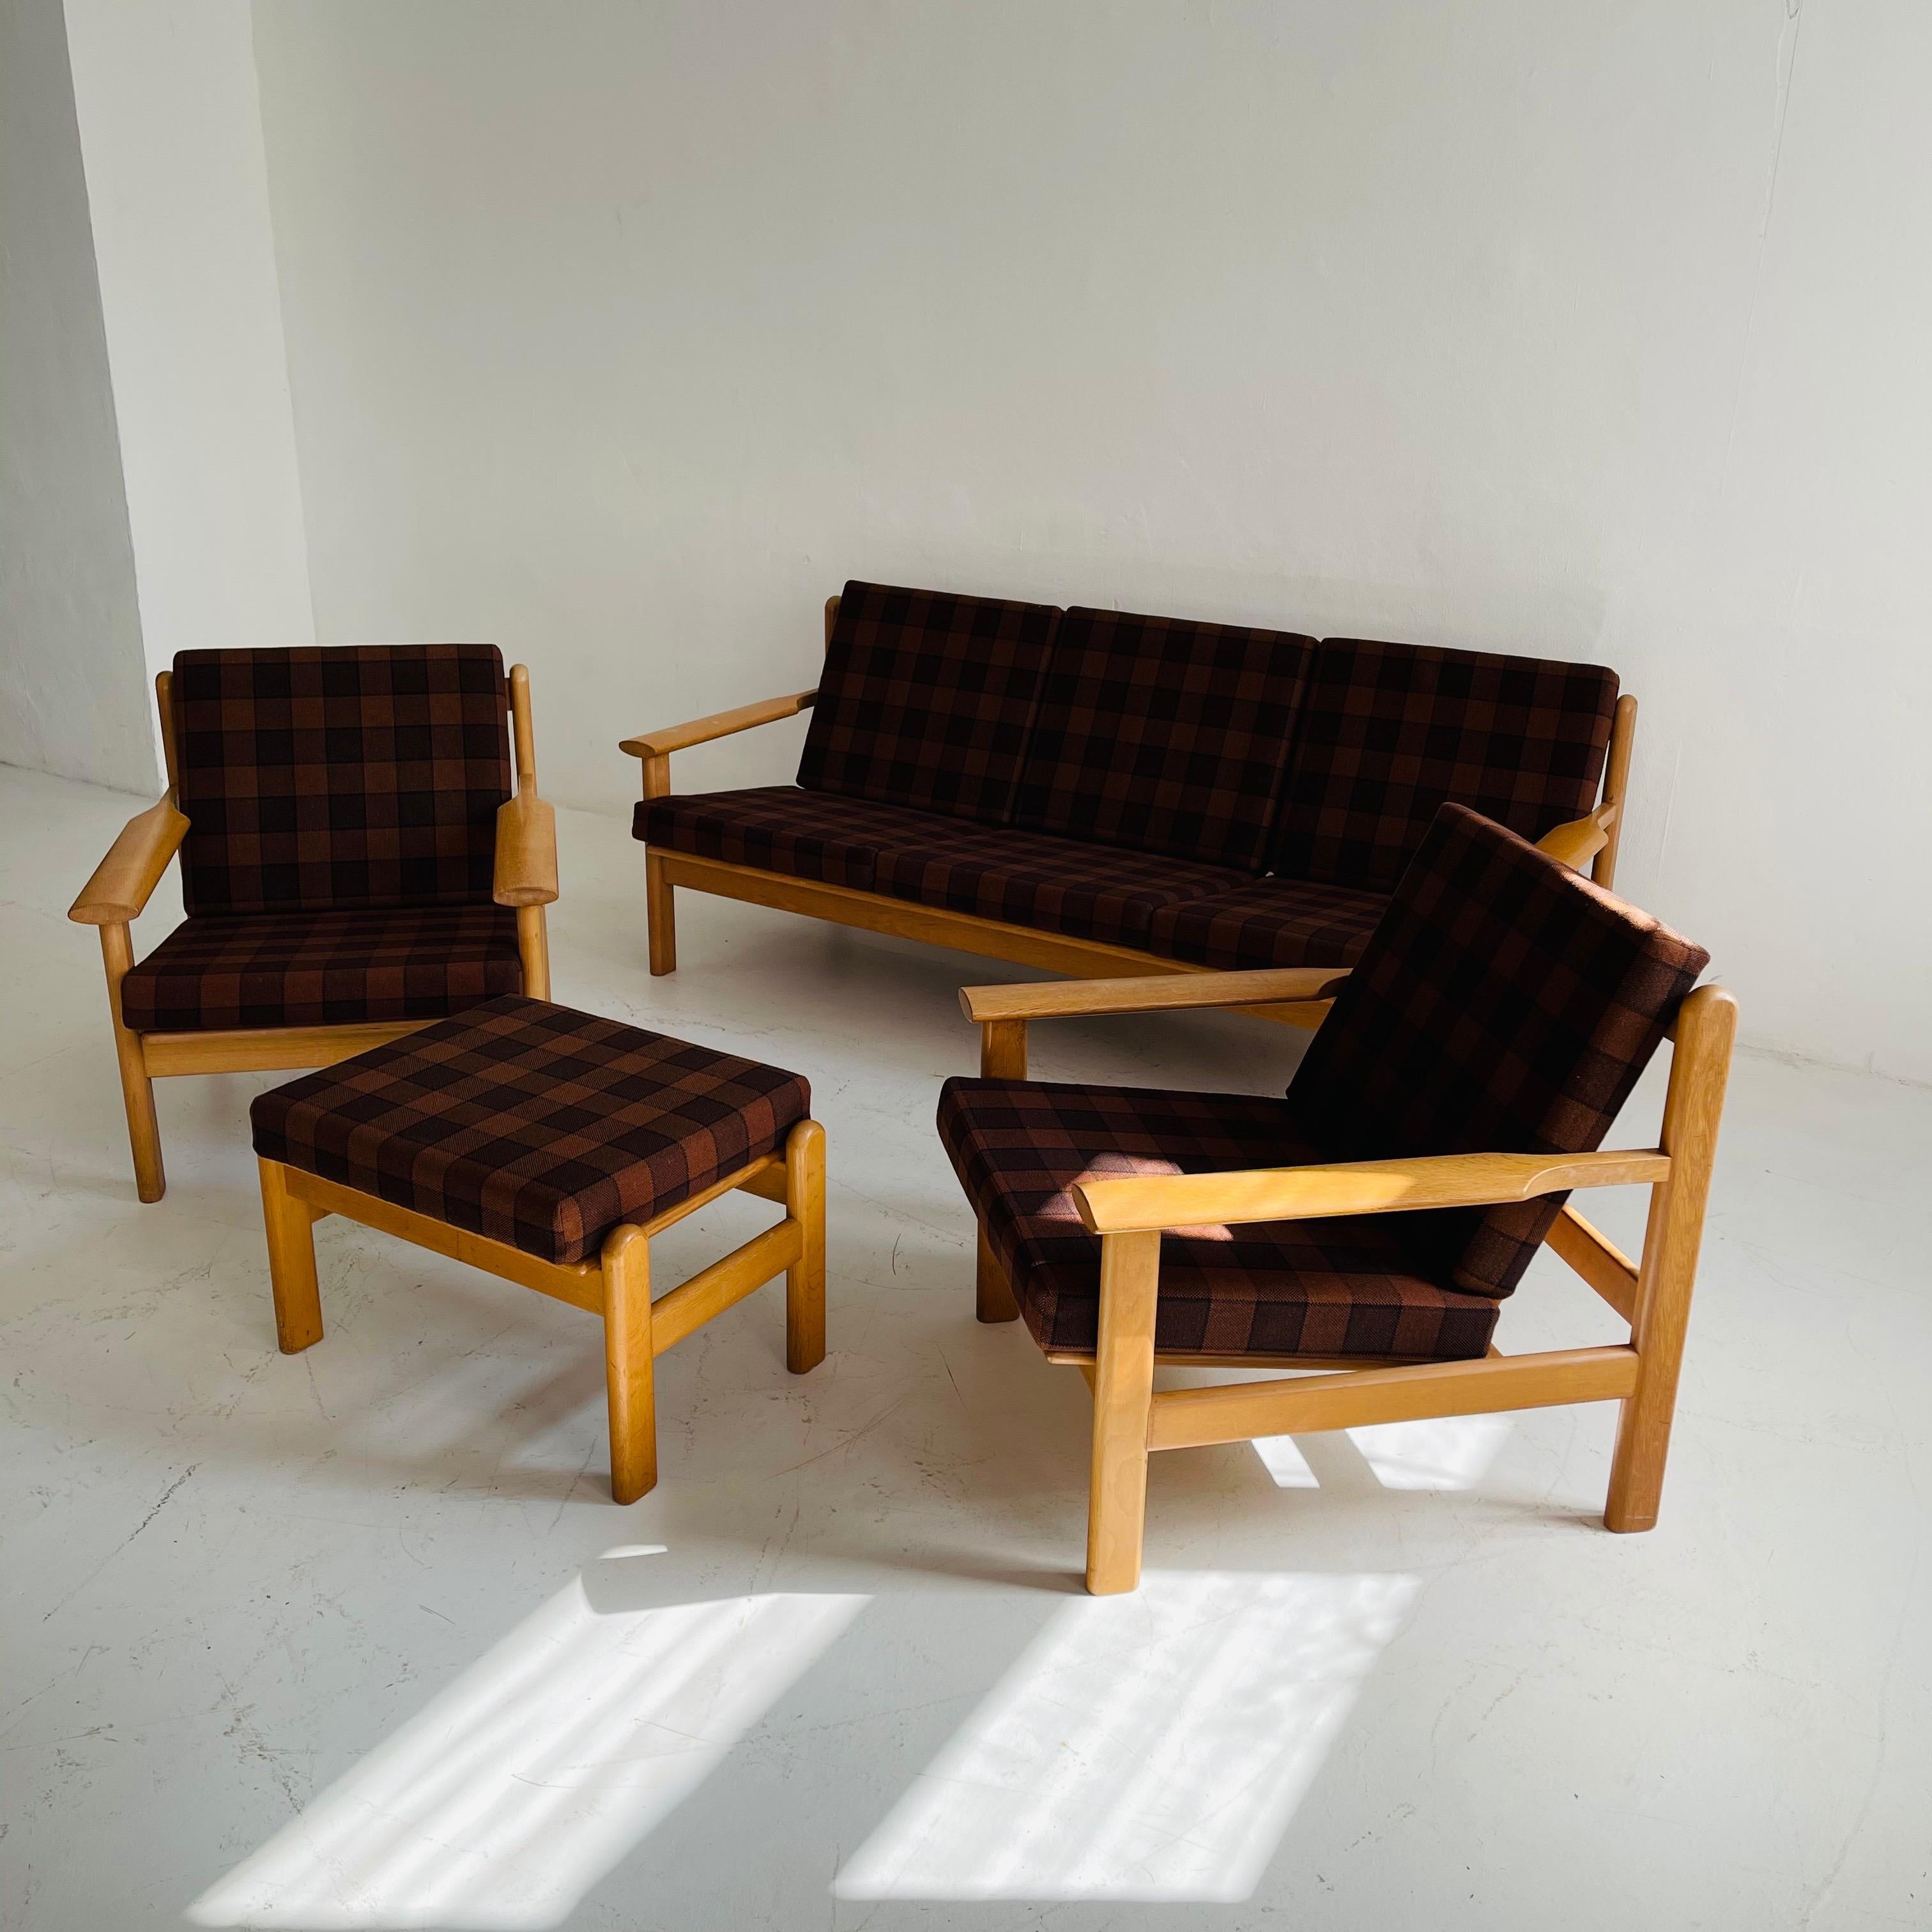 Living room suite sofa lounge chair by Poul Volther for Frem Rølje, Denmark, 1950.